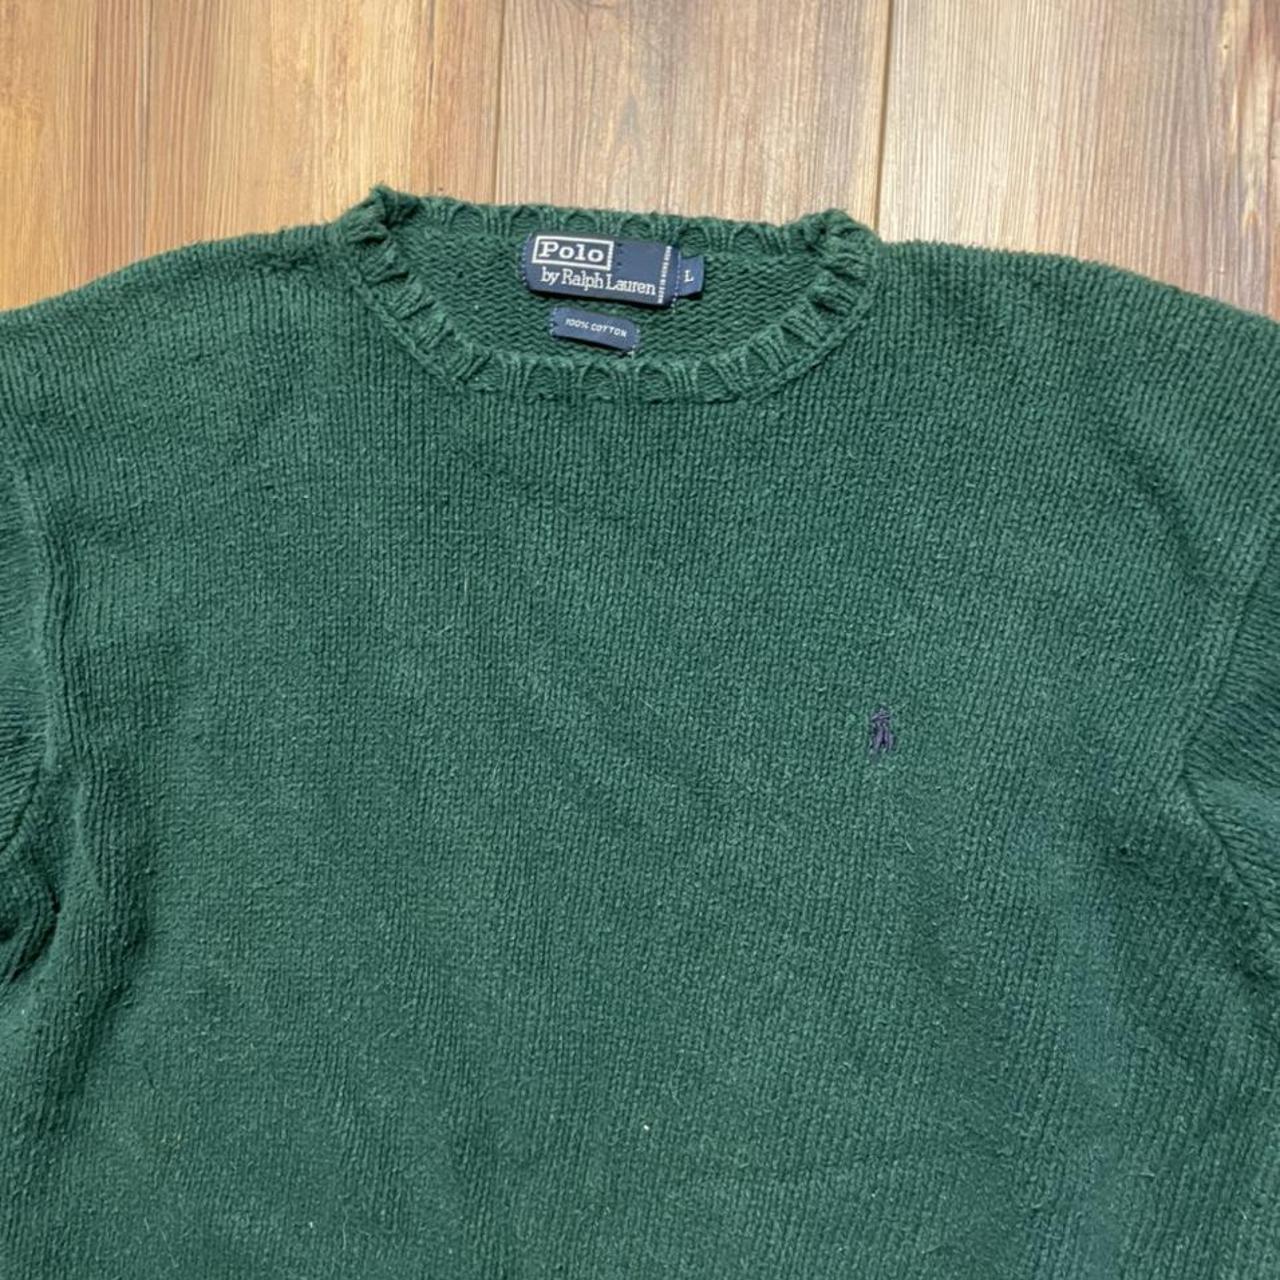 Vintage Polo Ralph Lauren sweater. Size large. In... - Depop